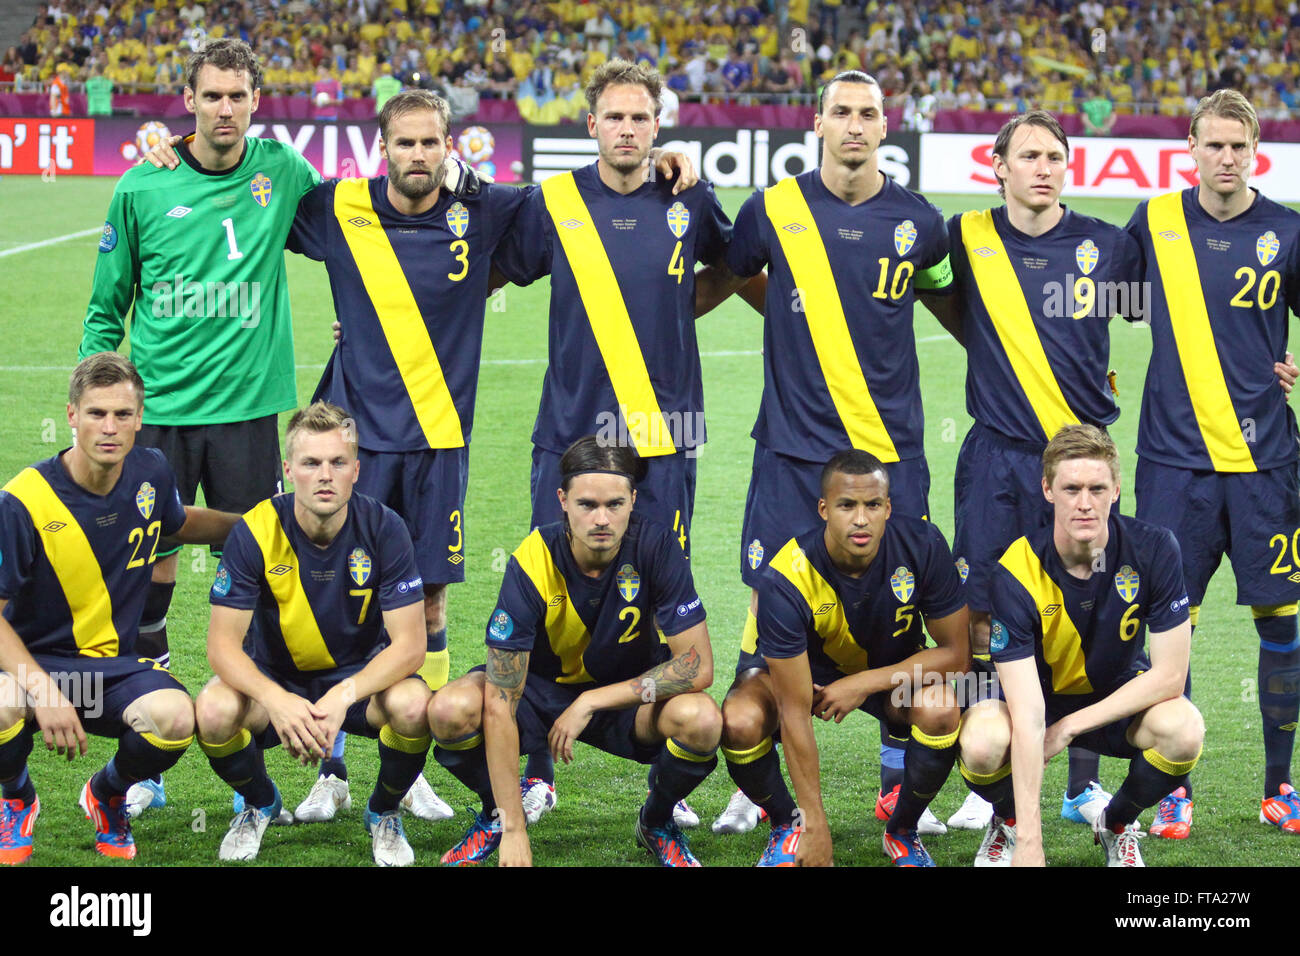 KYIV, UKRAINE - JUNE 11, 2012: Sweden national football team pose for a group photo before UEFA EURO 2012 game against Ukraine o Stock Photo